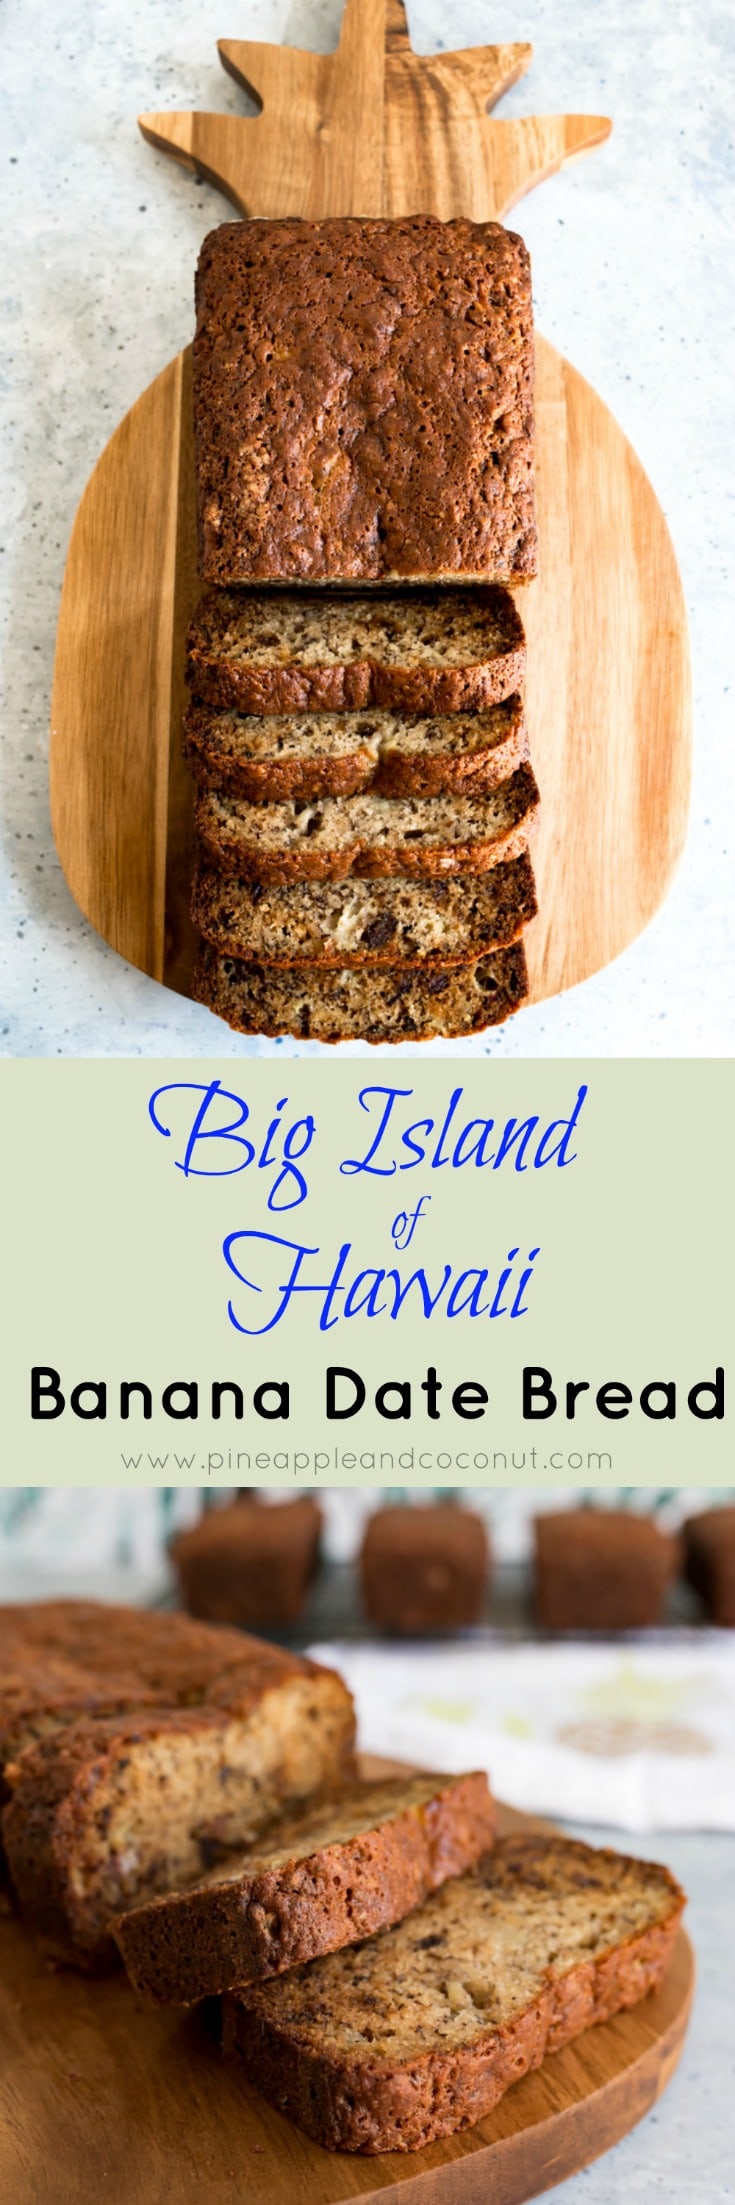 Big Island of Hawaii Banana Date Bread www.pineappleandcoconut.com